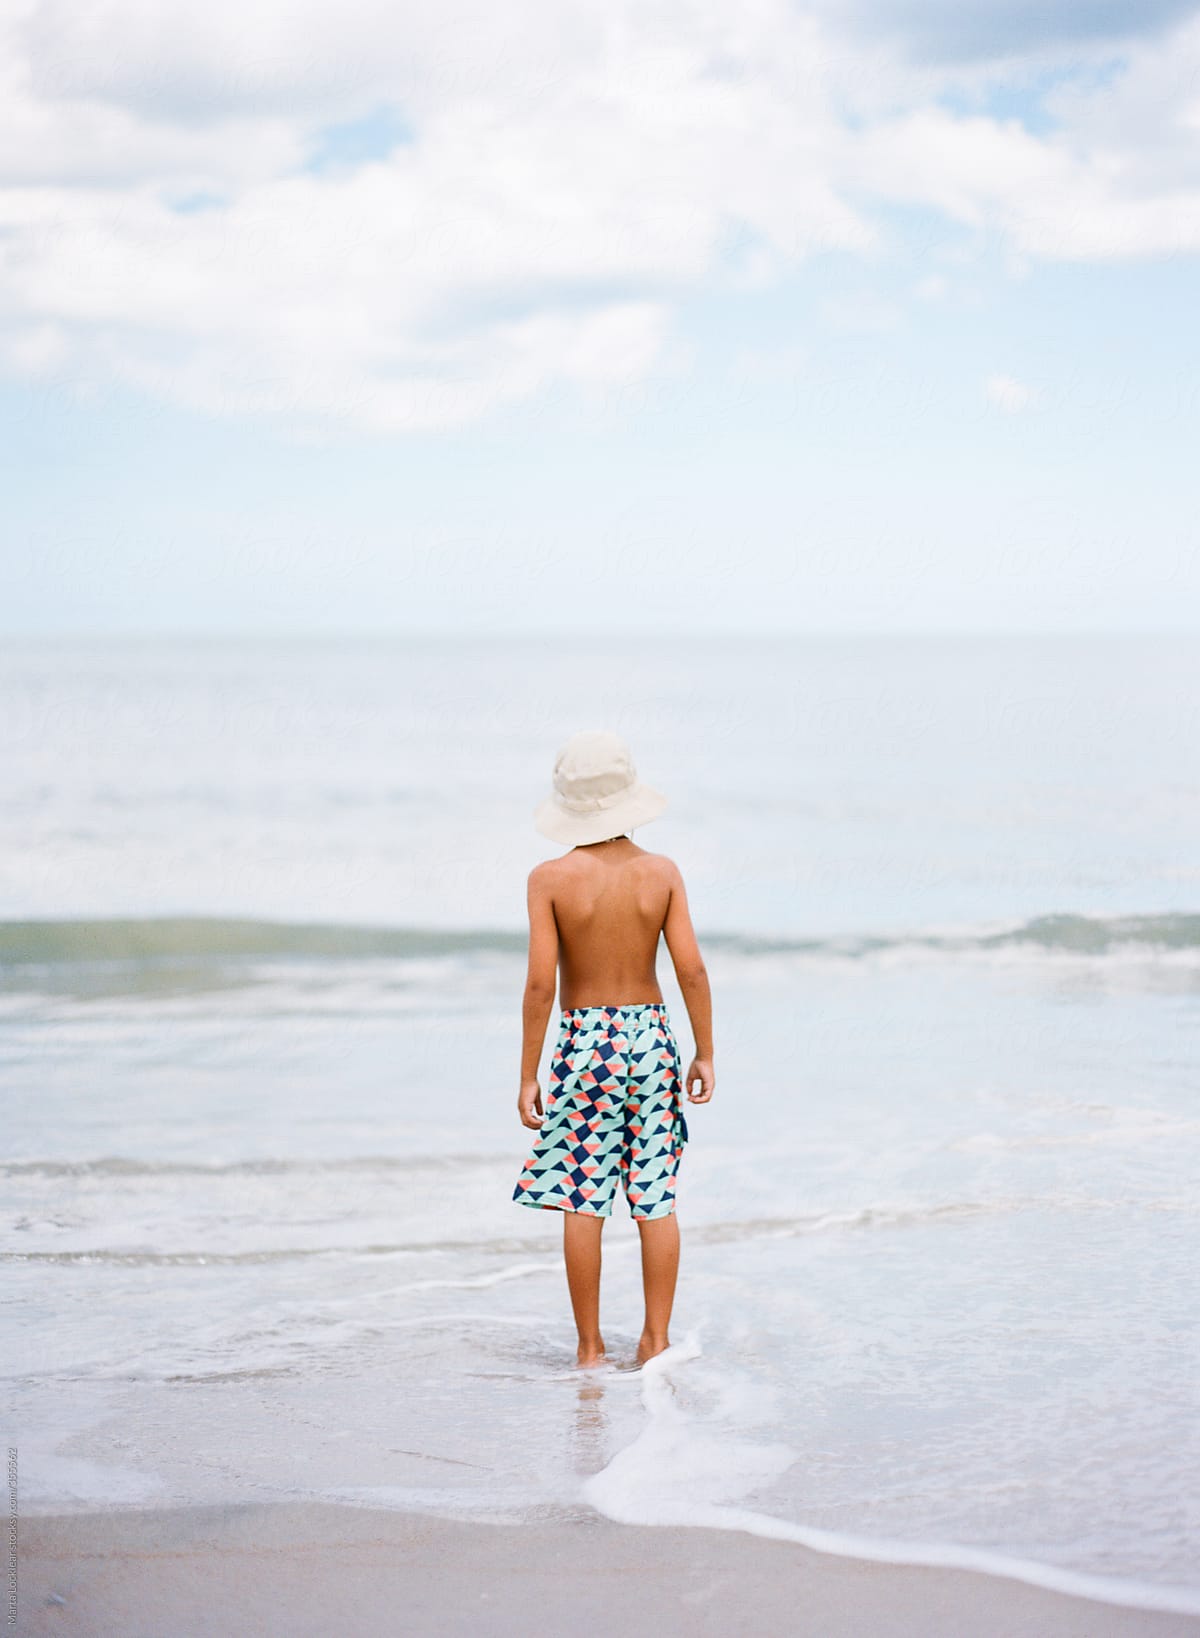 Boy At The Beach Wearing A Bucket Hat by Stocksy Contributor Marta  Locklear - Stocksy